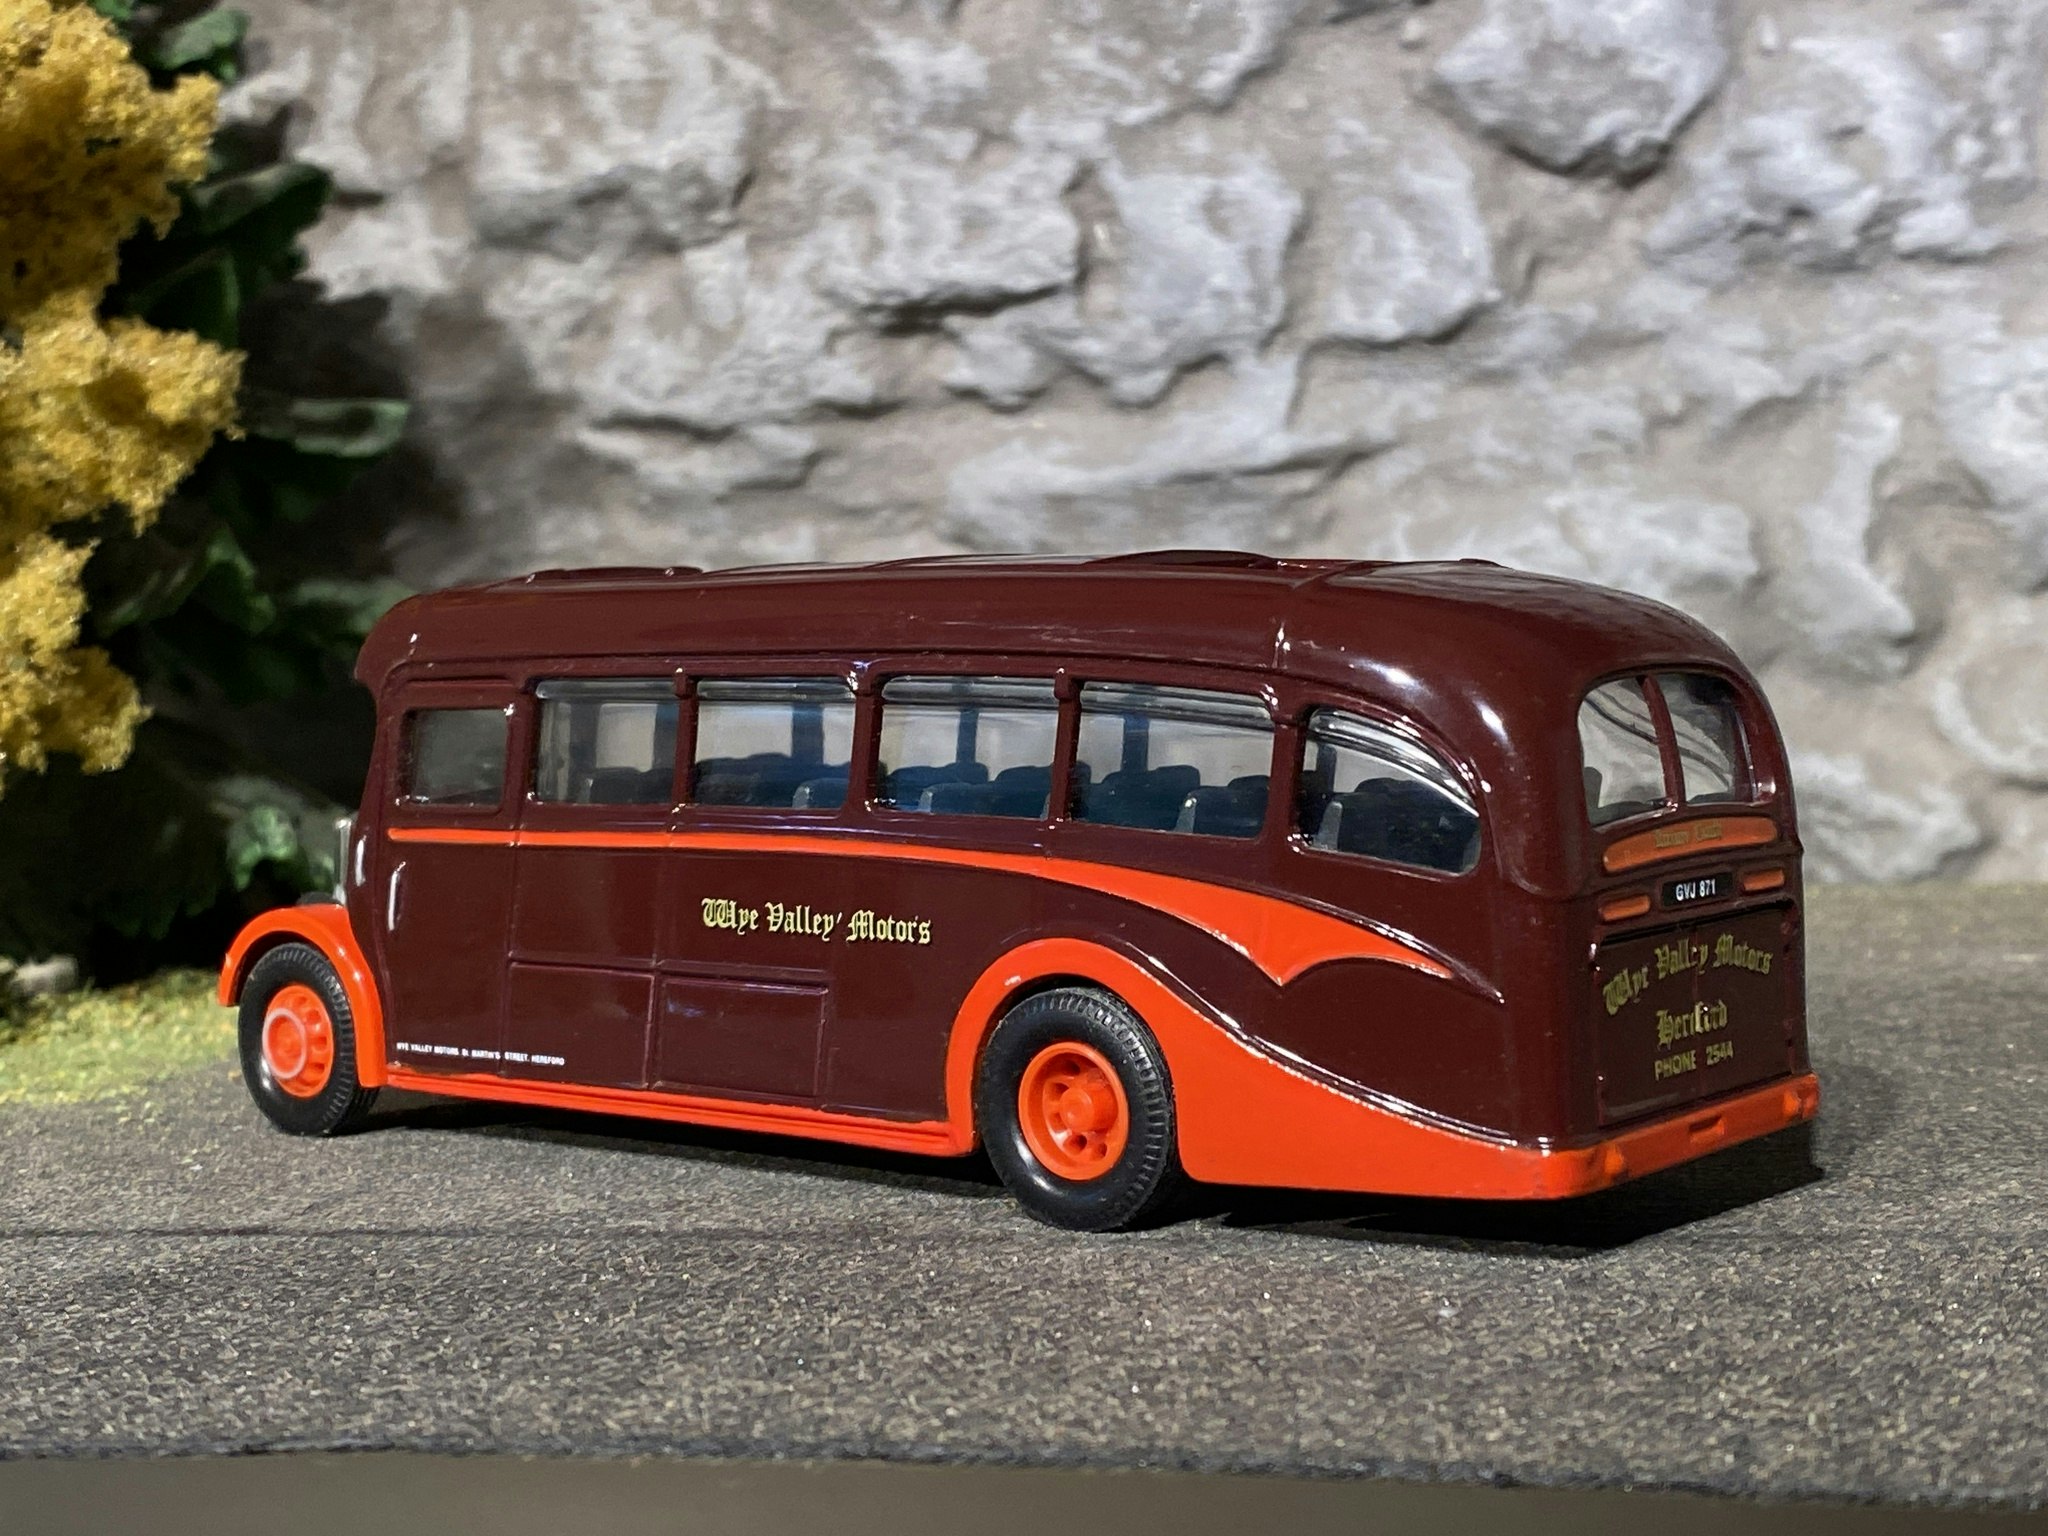 Skala 1/50 AEC Regal, WYE Valley Motors buss - Public Transport fr Corgi / Mattel UK Limited